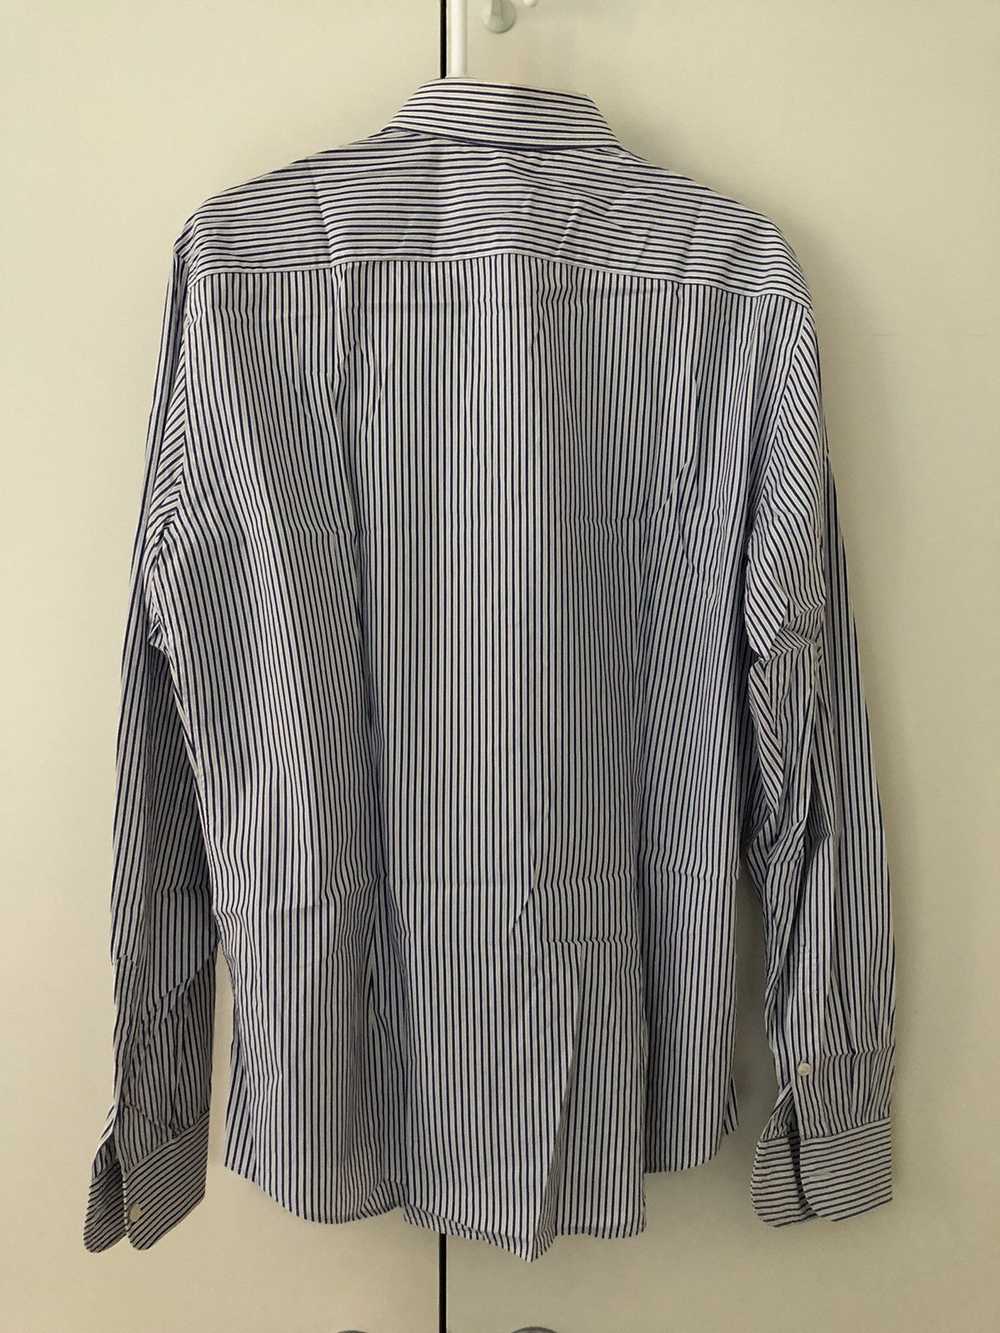 Salvatore Ferragamo Blue stripe shirts Size large - image 6